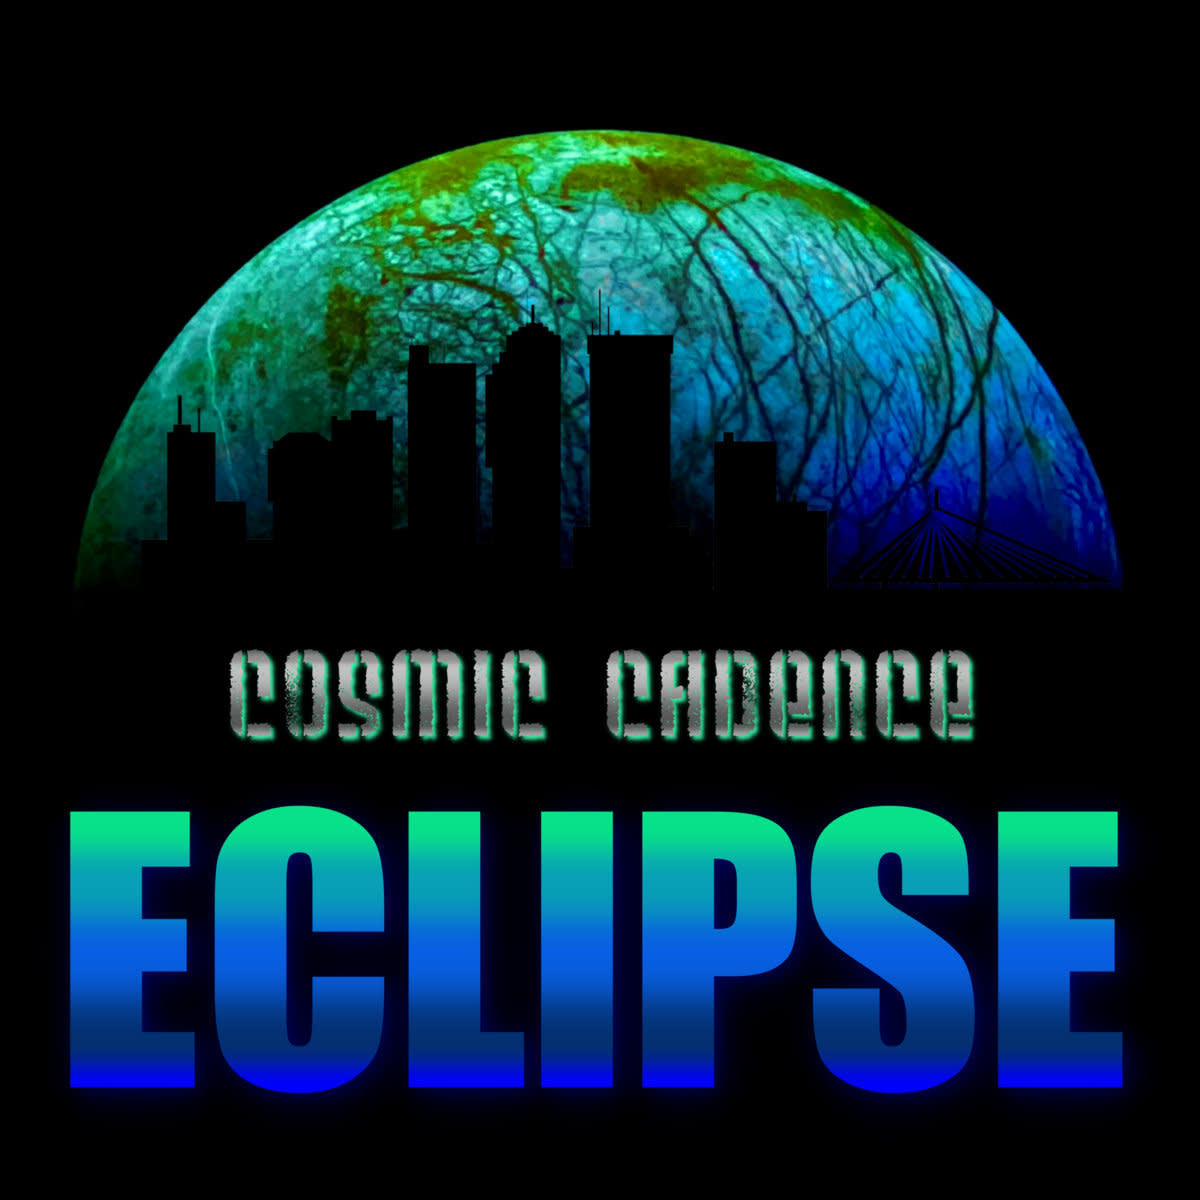 Cosmic Cadence – "Eclipse" EP (2022)